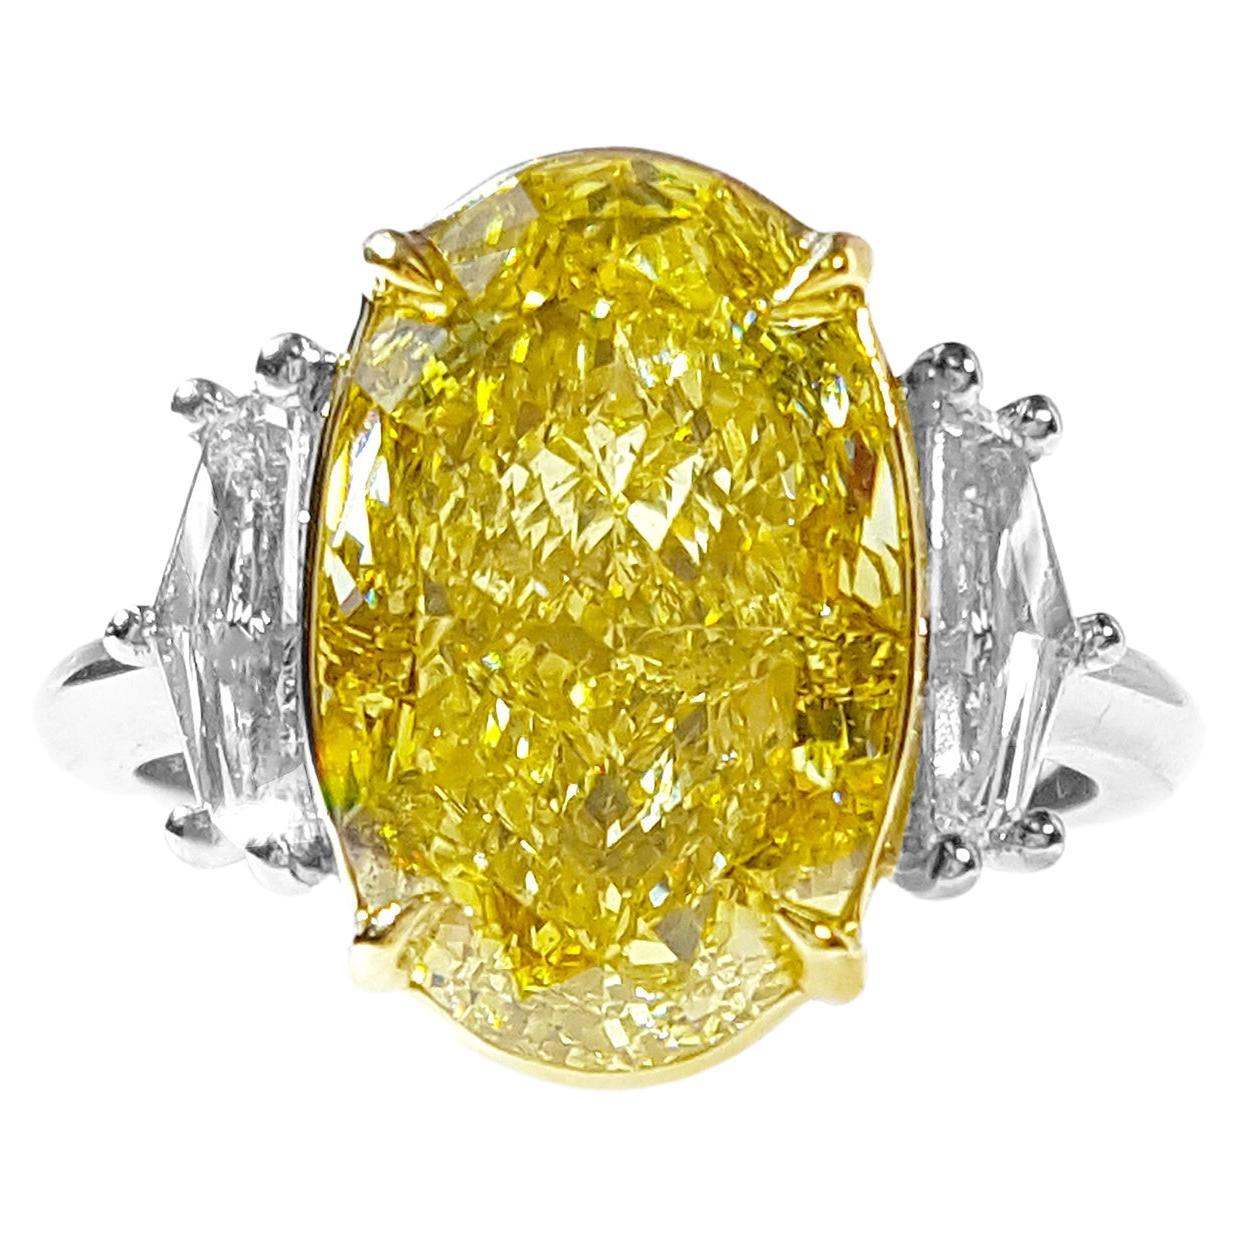 6 Carat Fancy Intense Yellow Diamond Three-Stone Engagement Ring, GIA Certified.